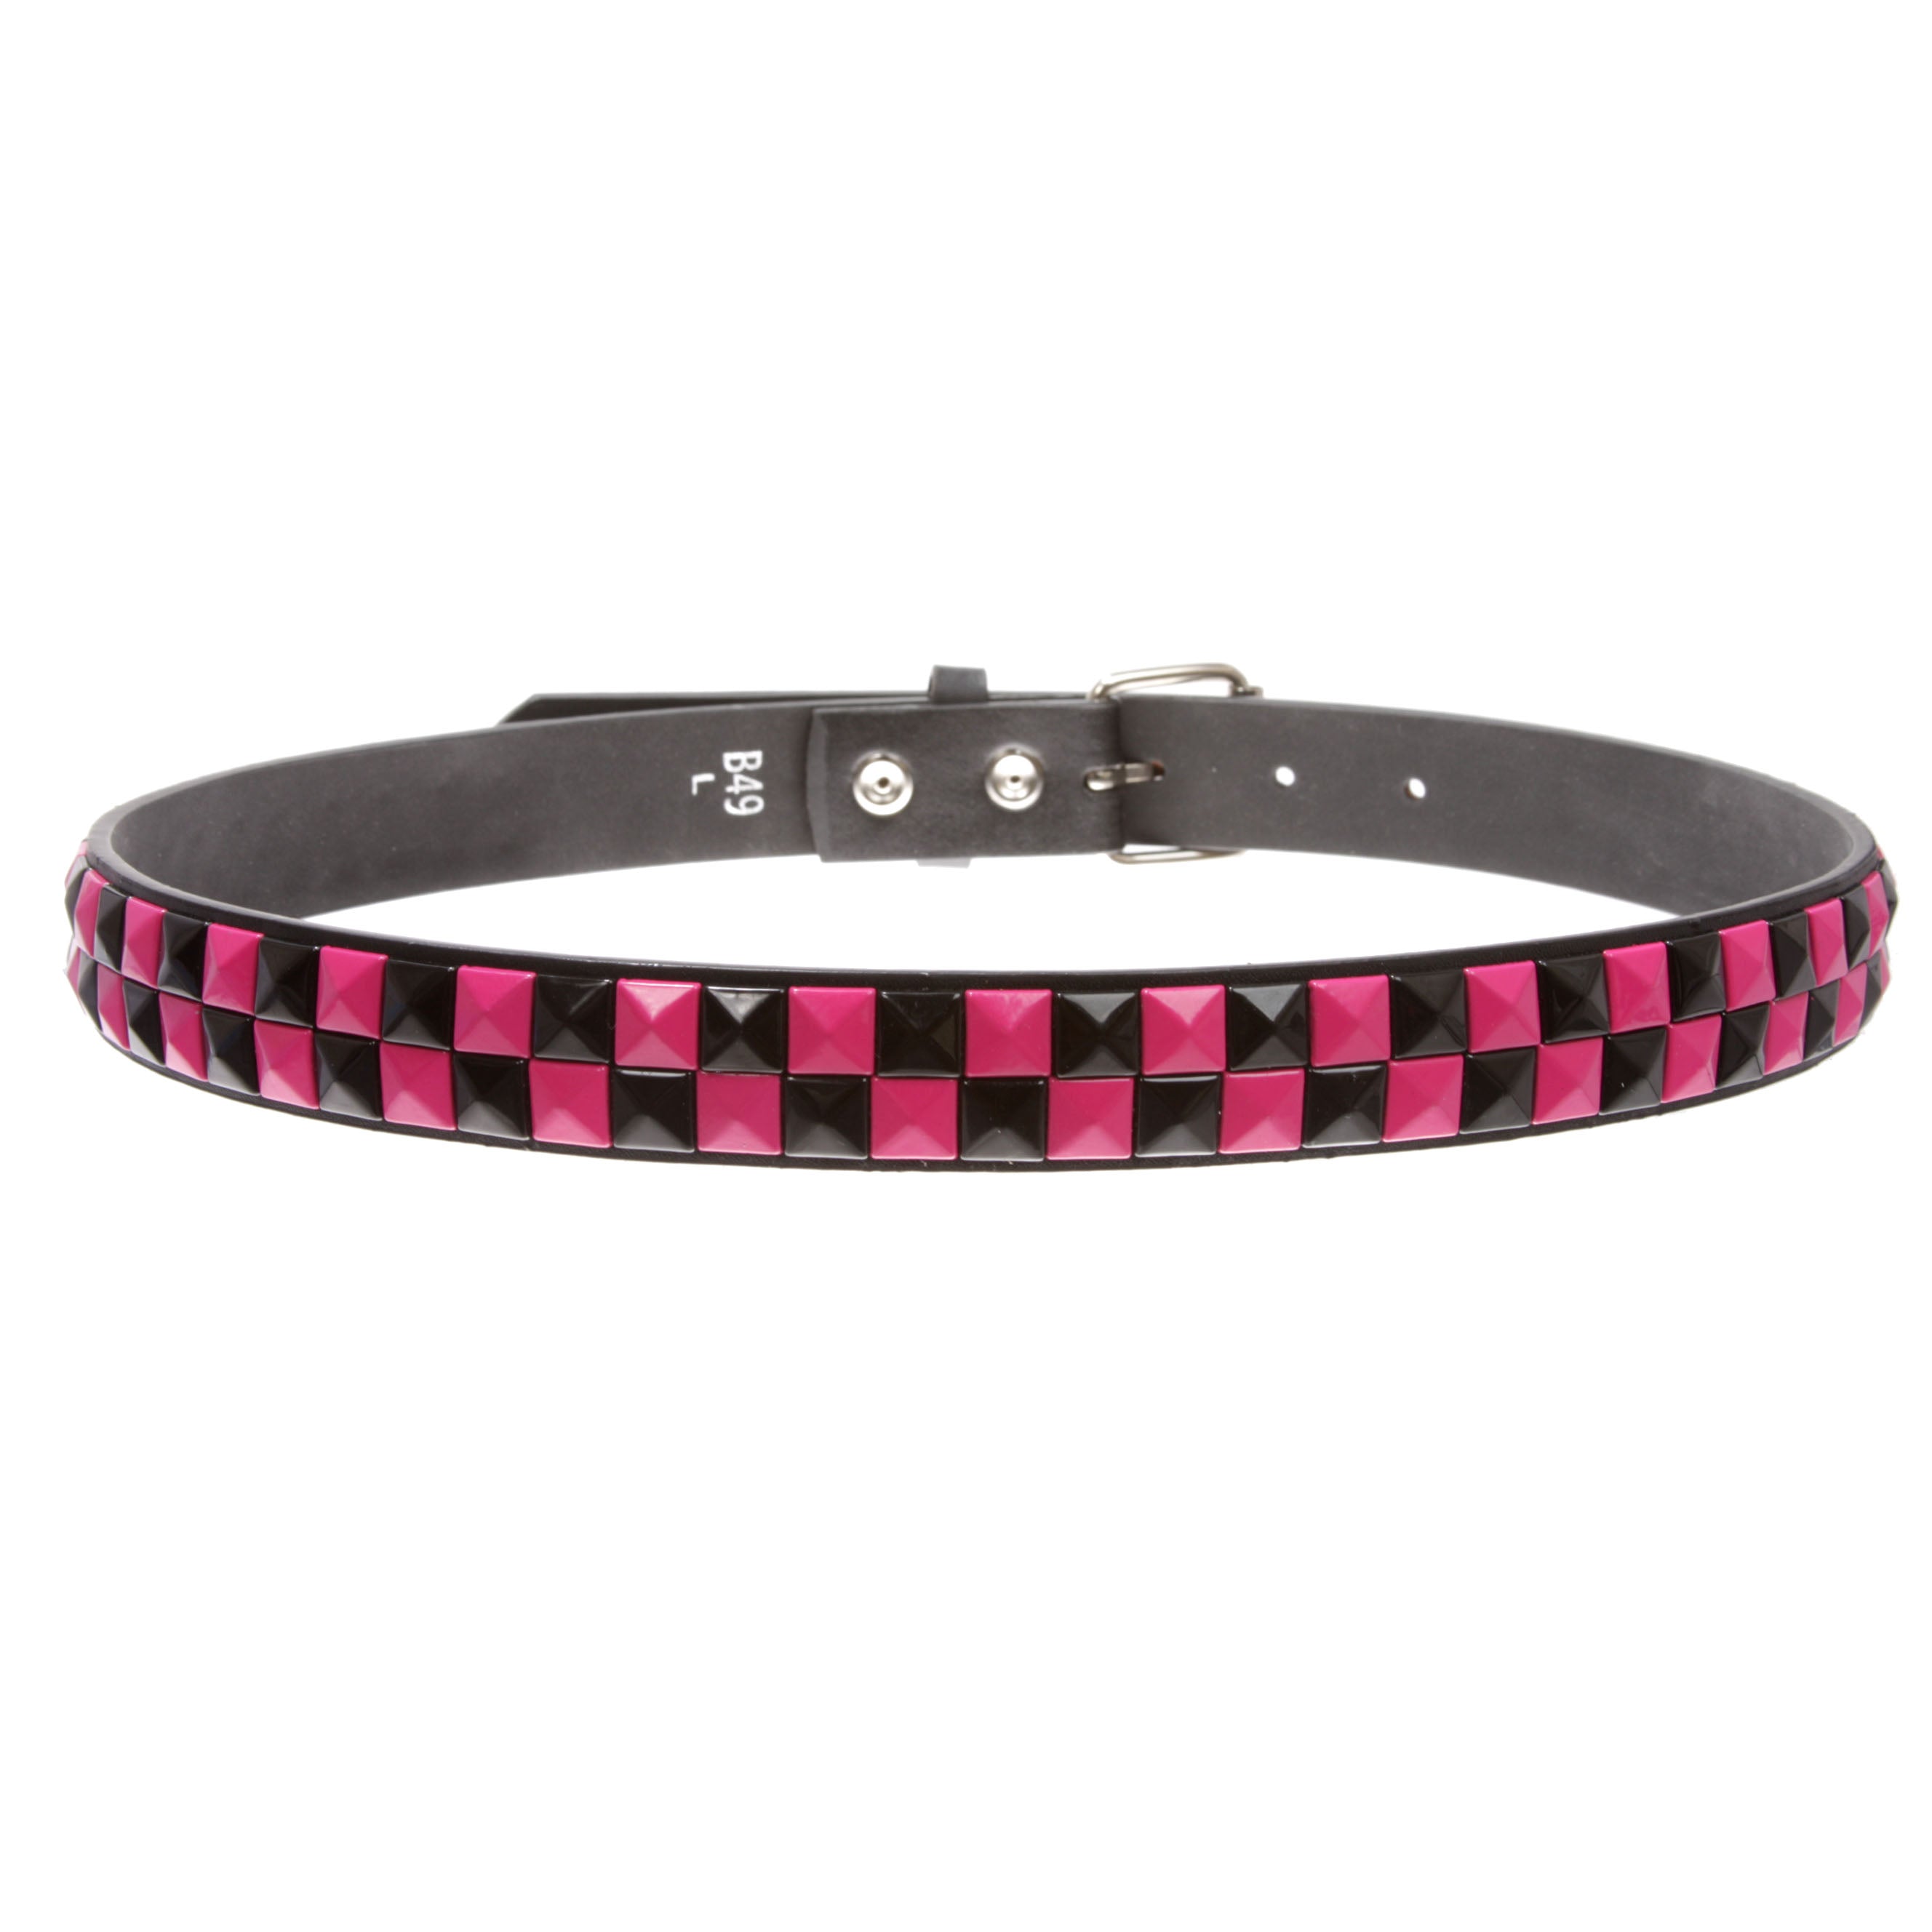 Kids Snap On Punk Rock Black & Hot Pink Star Studded Checkerboard Leather Belt